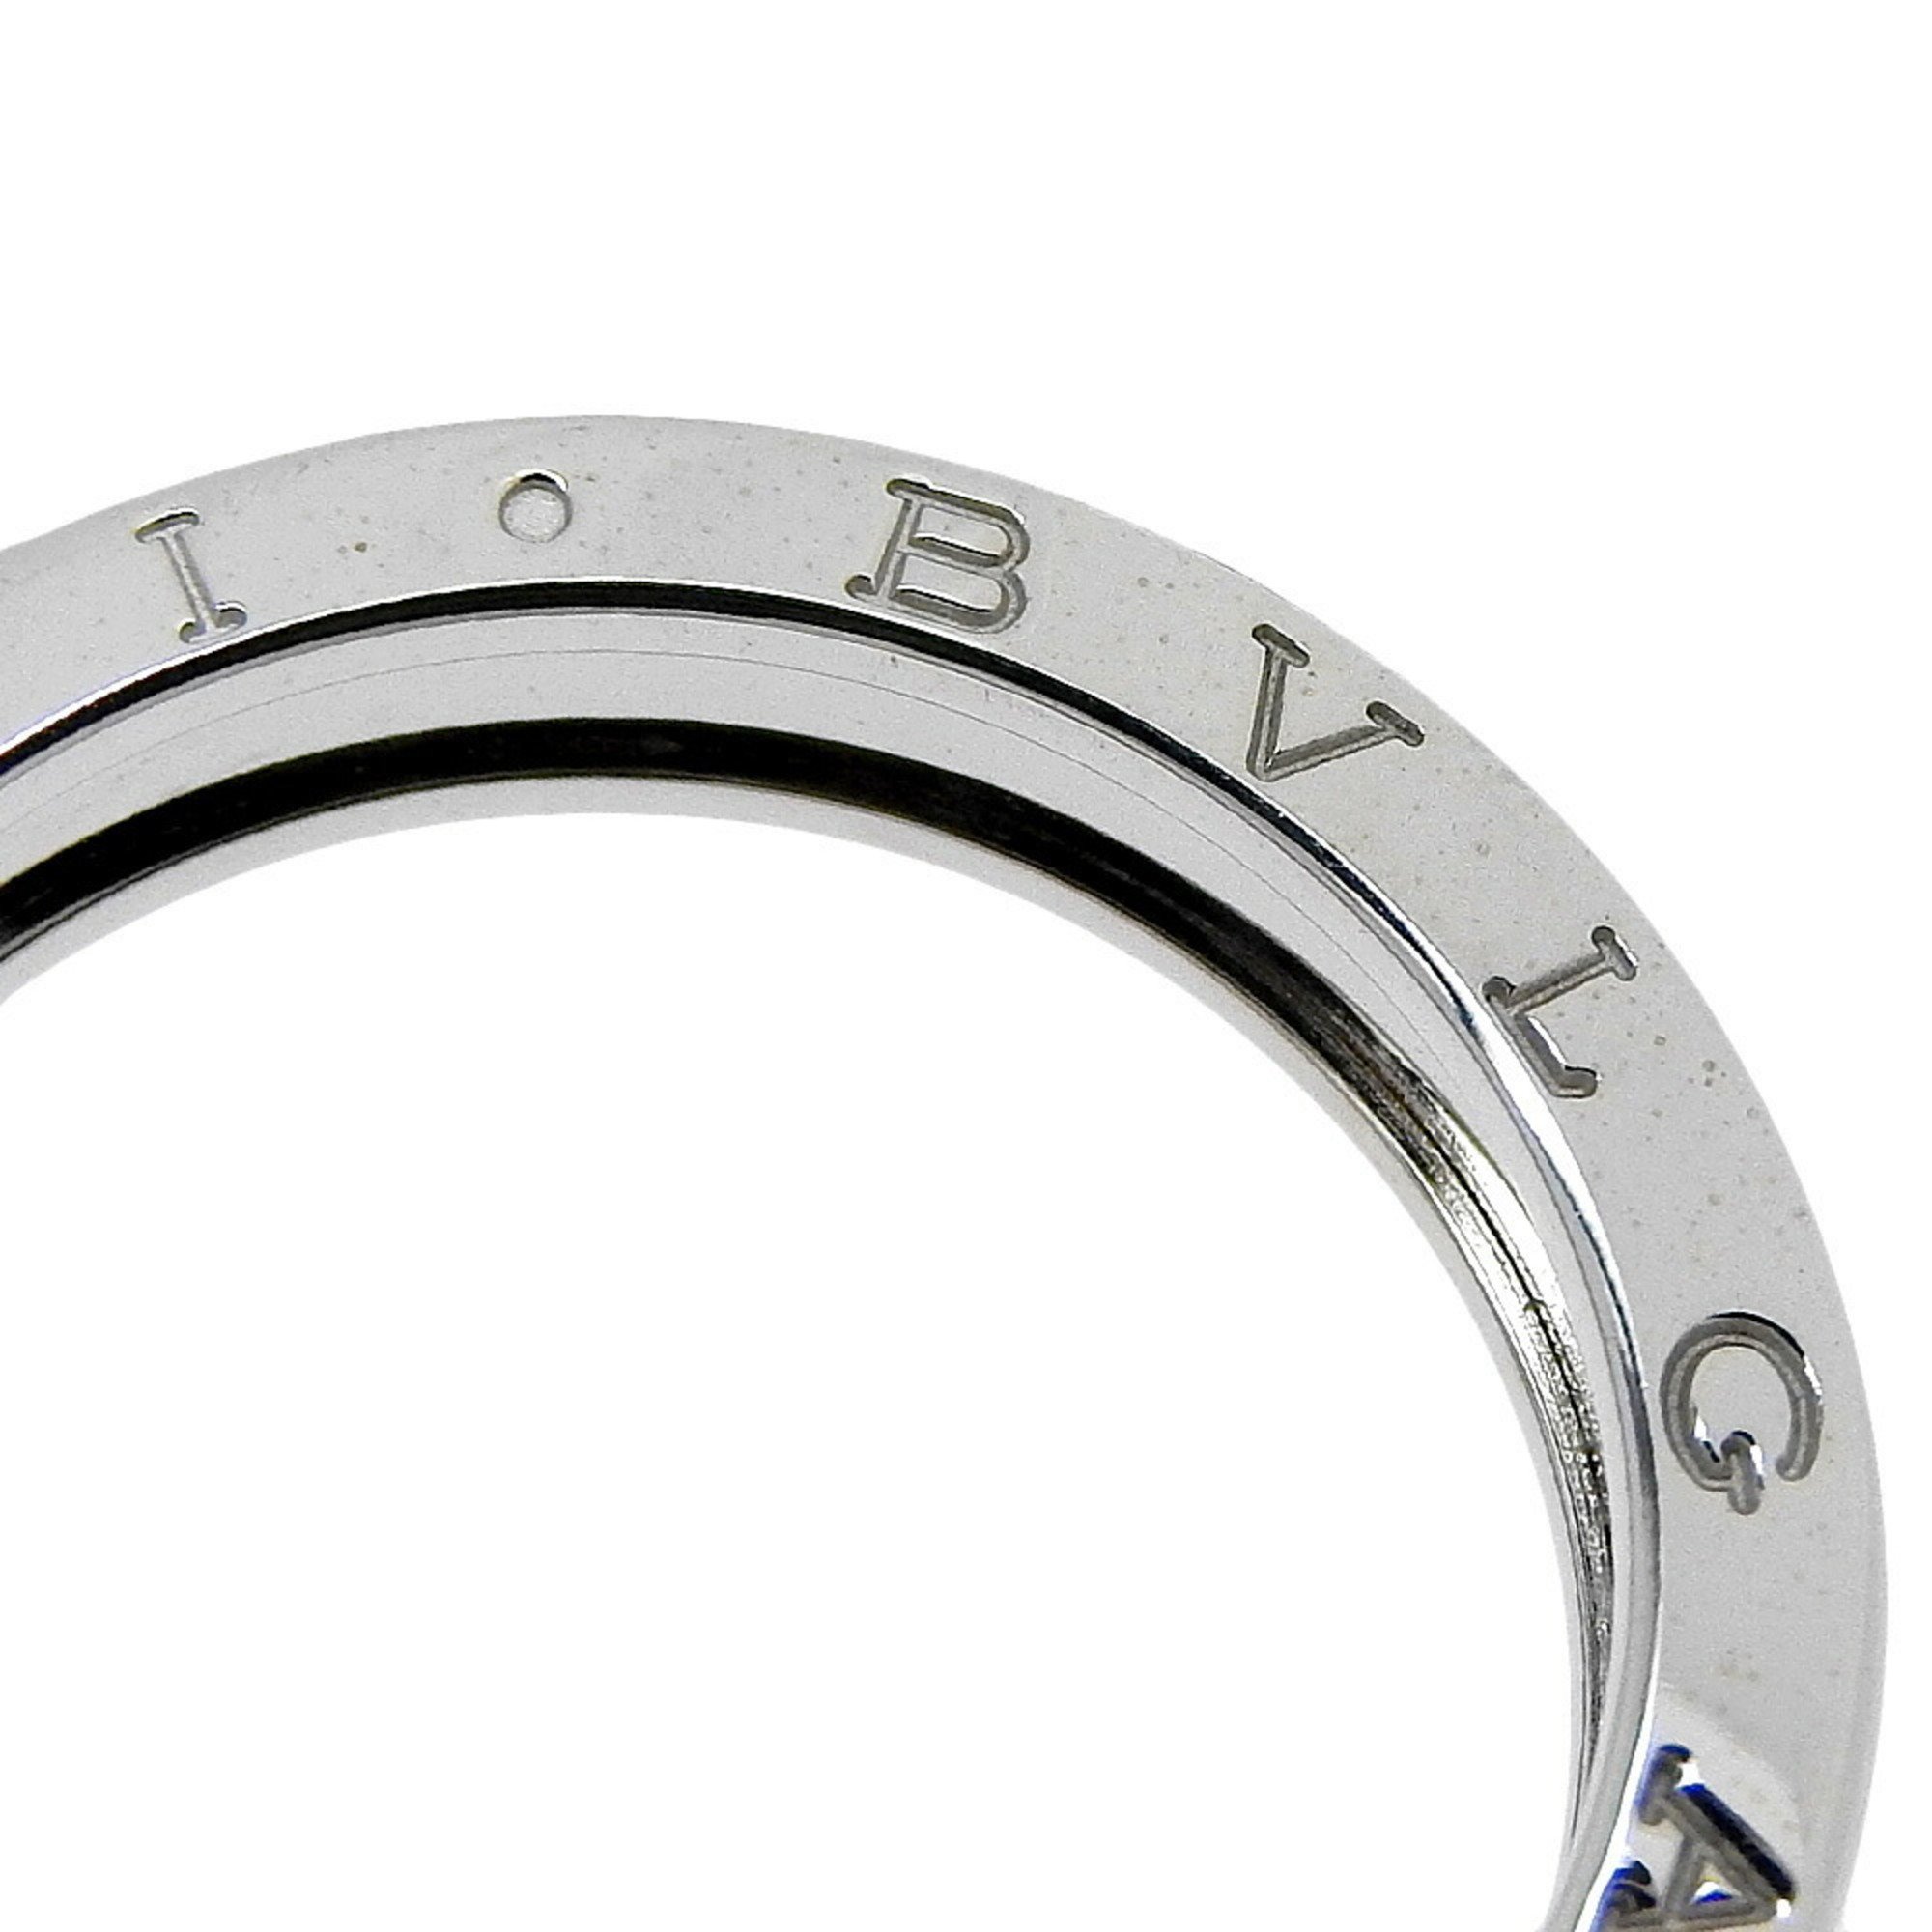 BVLGARI B.Zero1 23.5 size ring, K18 white gold, approx. 8.7g, B.Zero1, men's